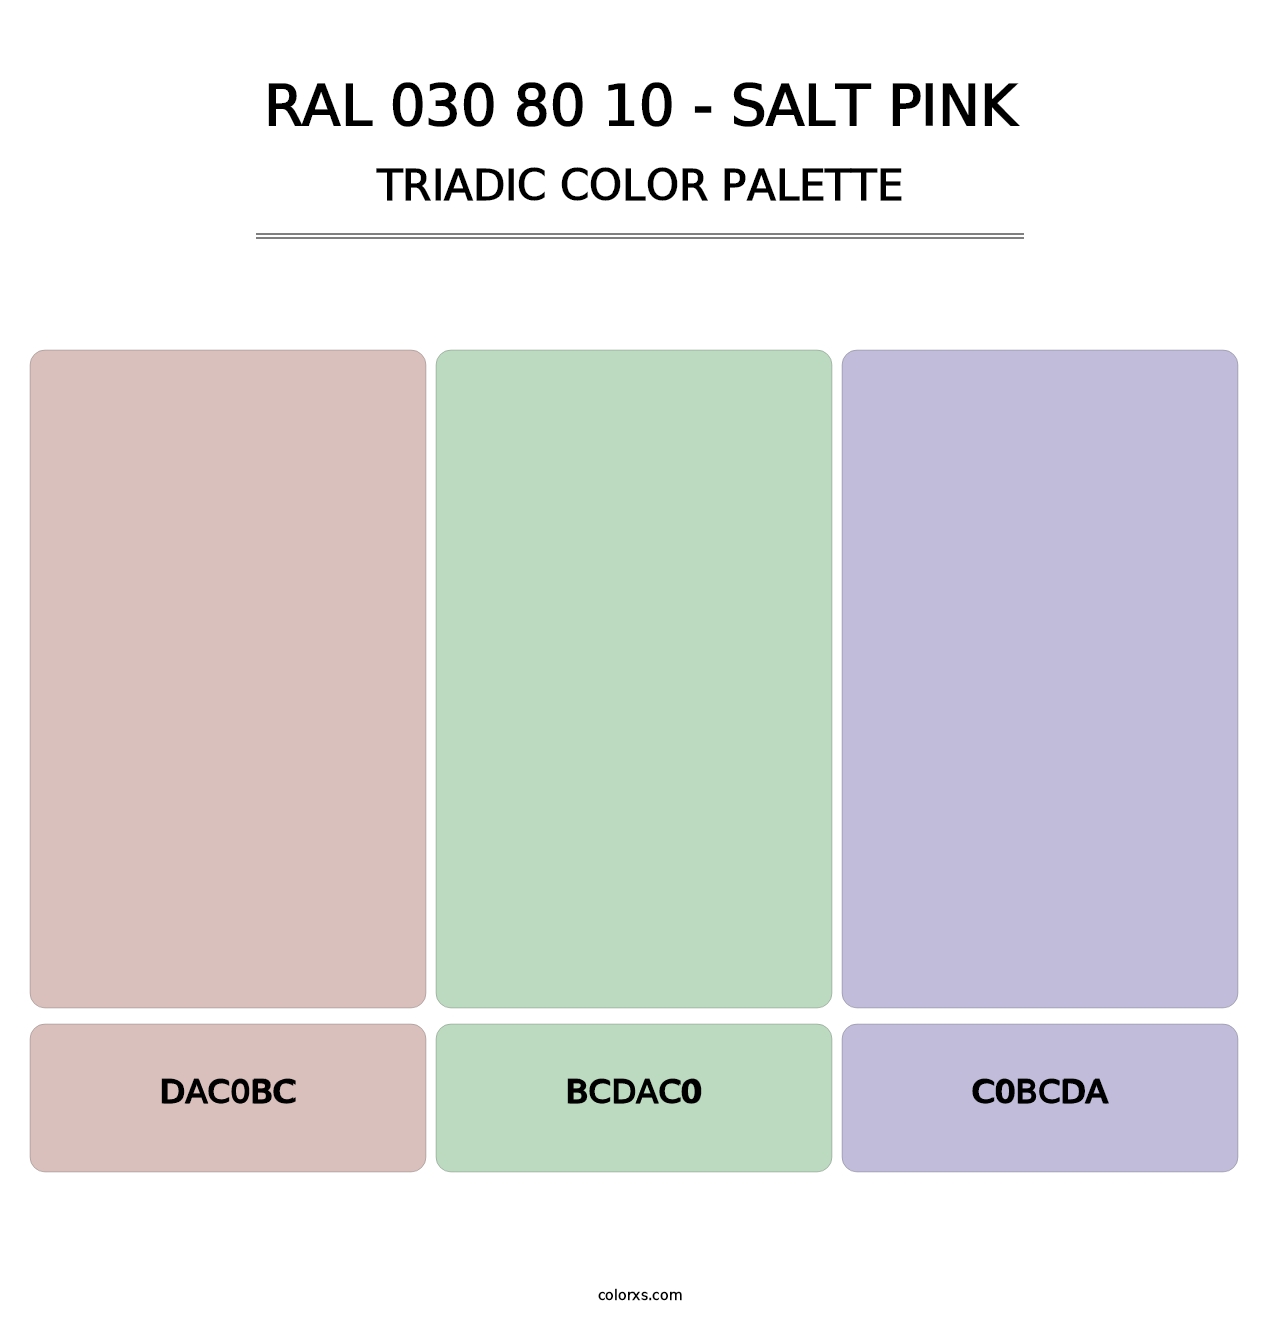 RAL 030 80 10 - Salt Pink - Triadic Color Palette